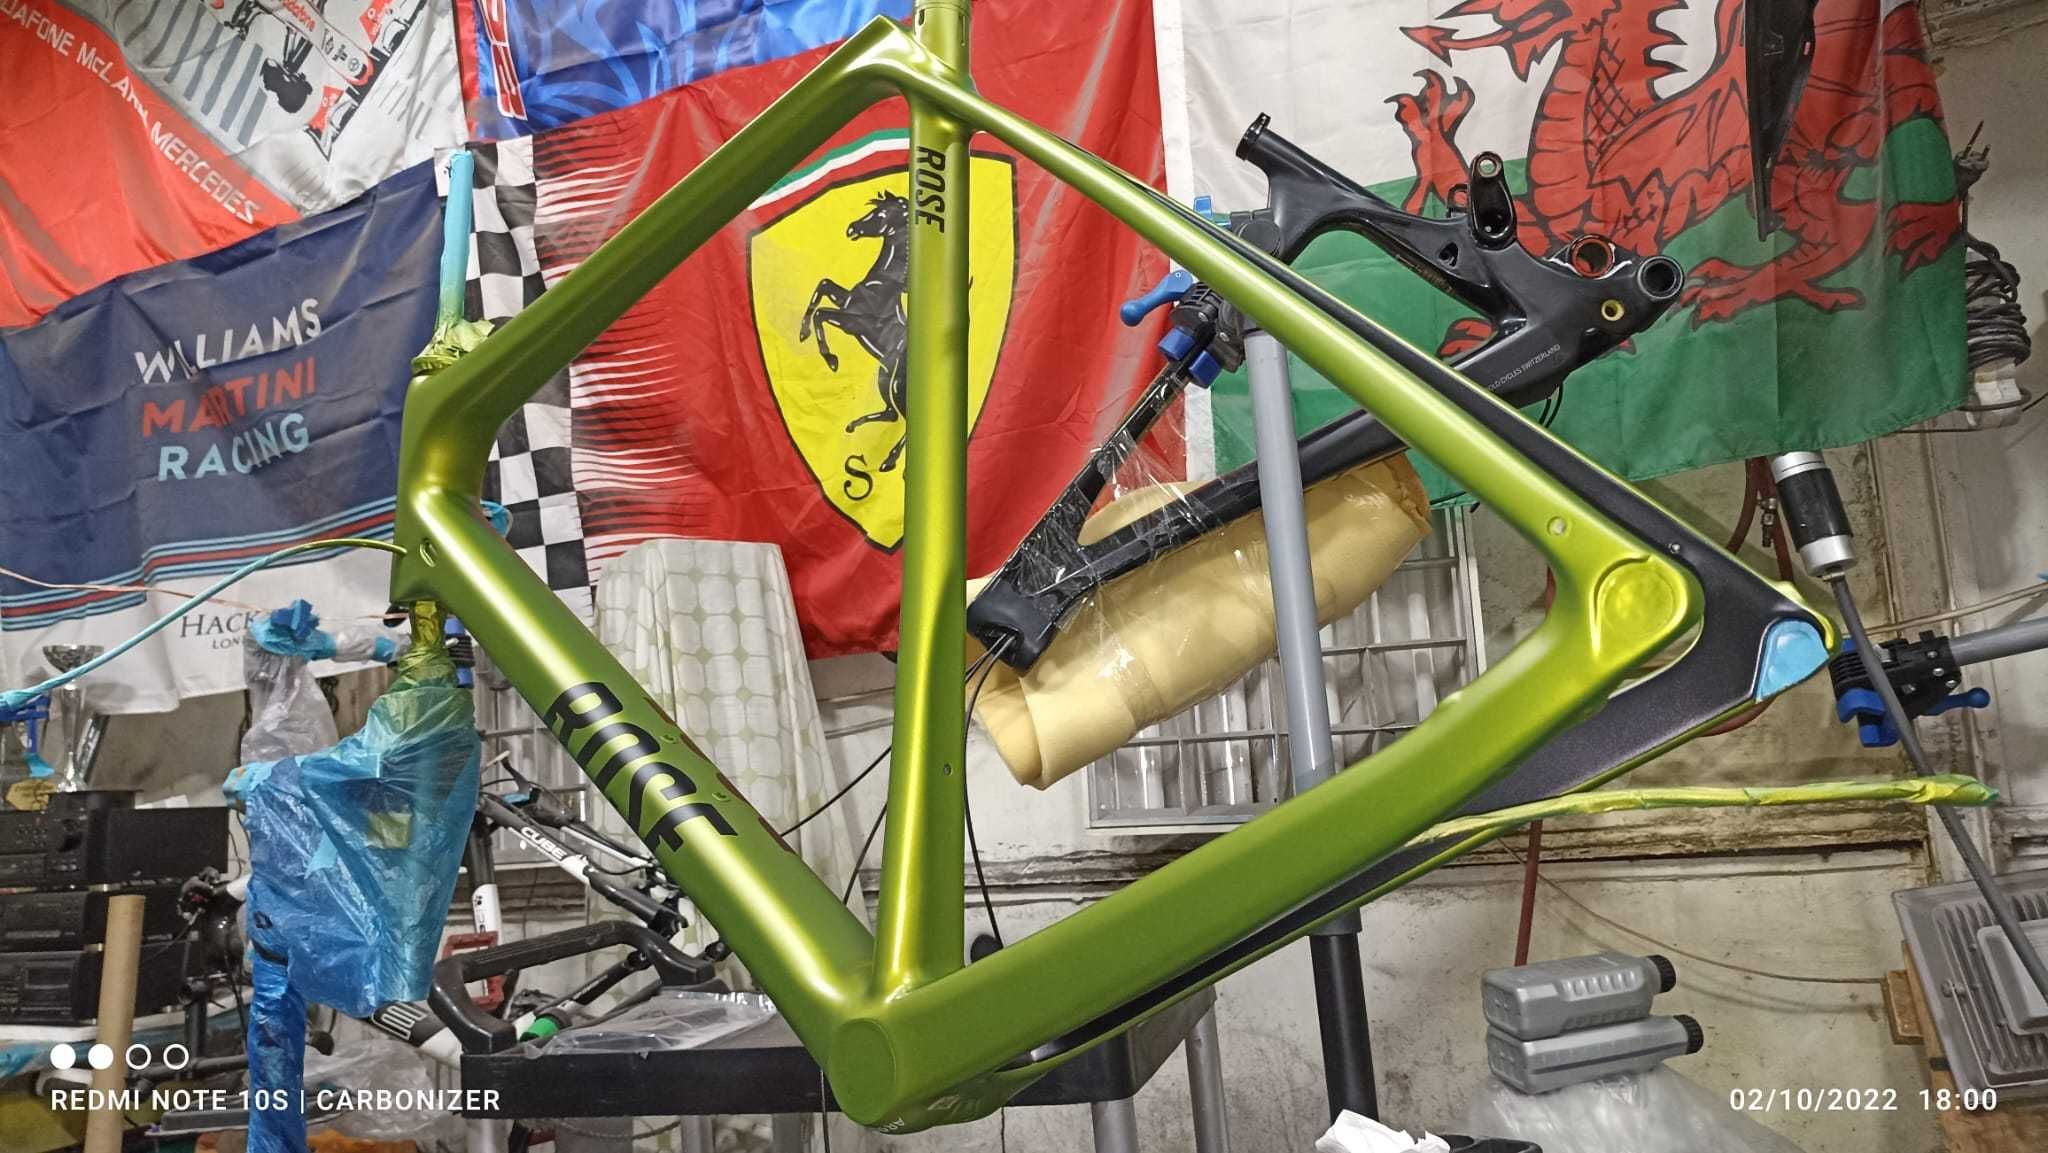 Cadru bicicleta Scott, Cube, reparatii cadre carbon/al, vopsitorie